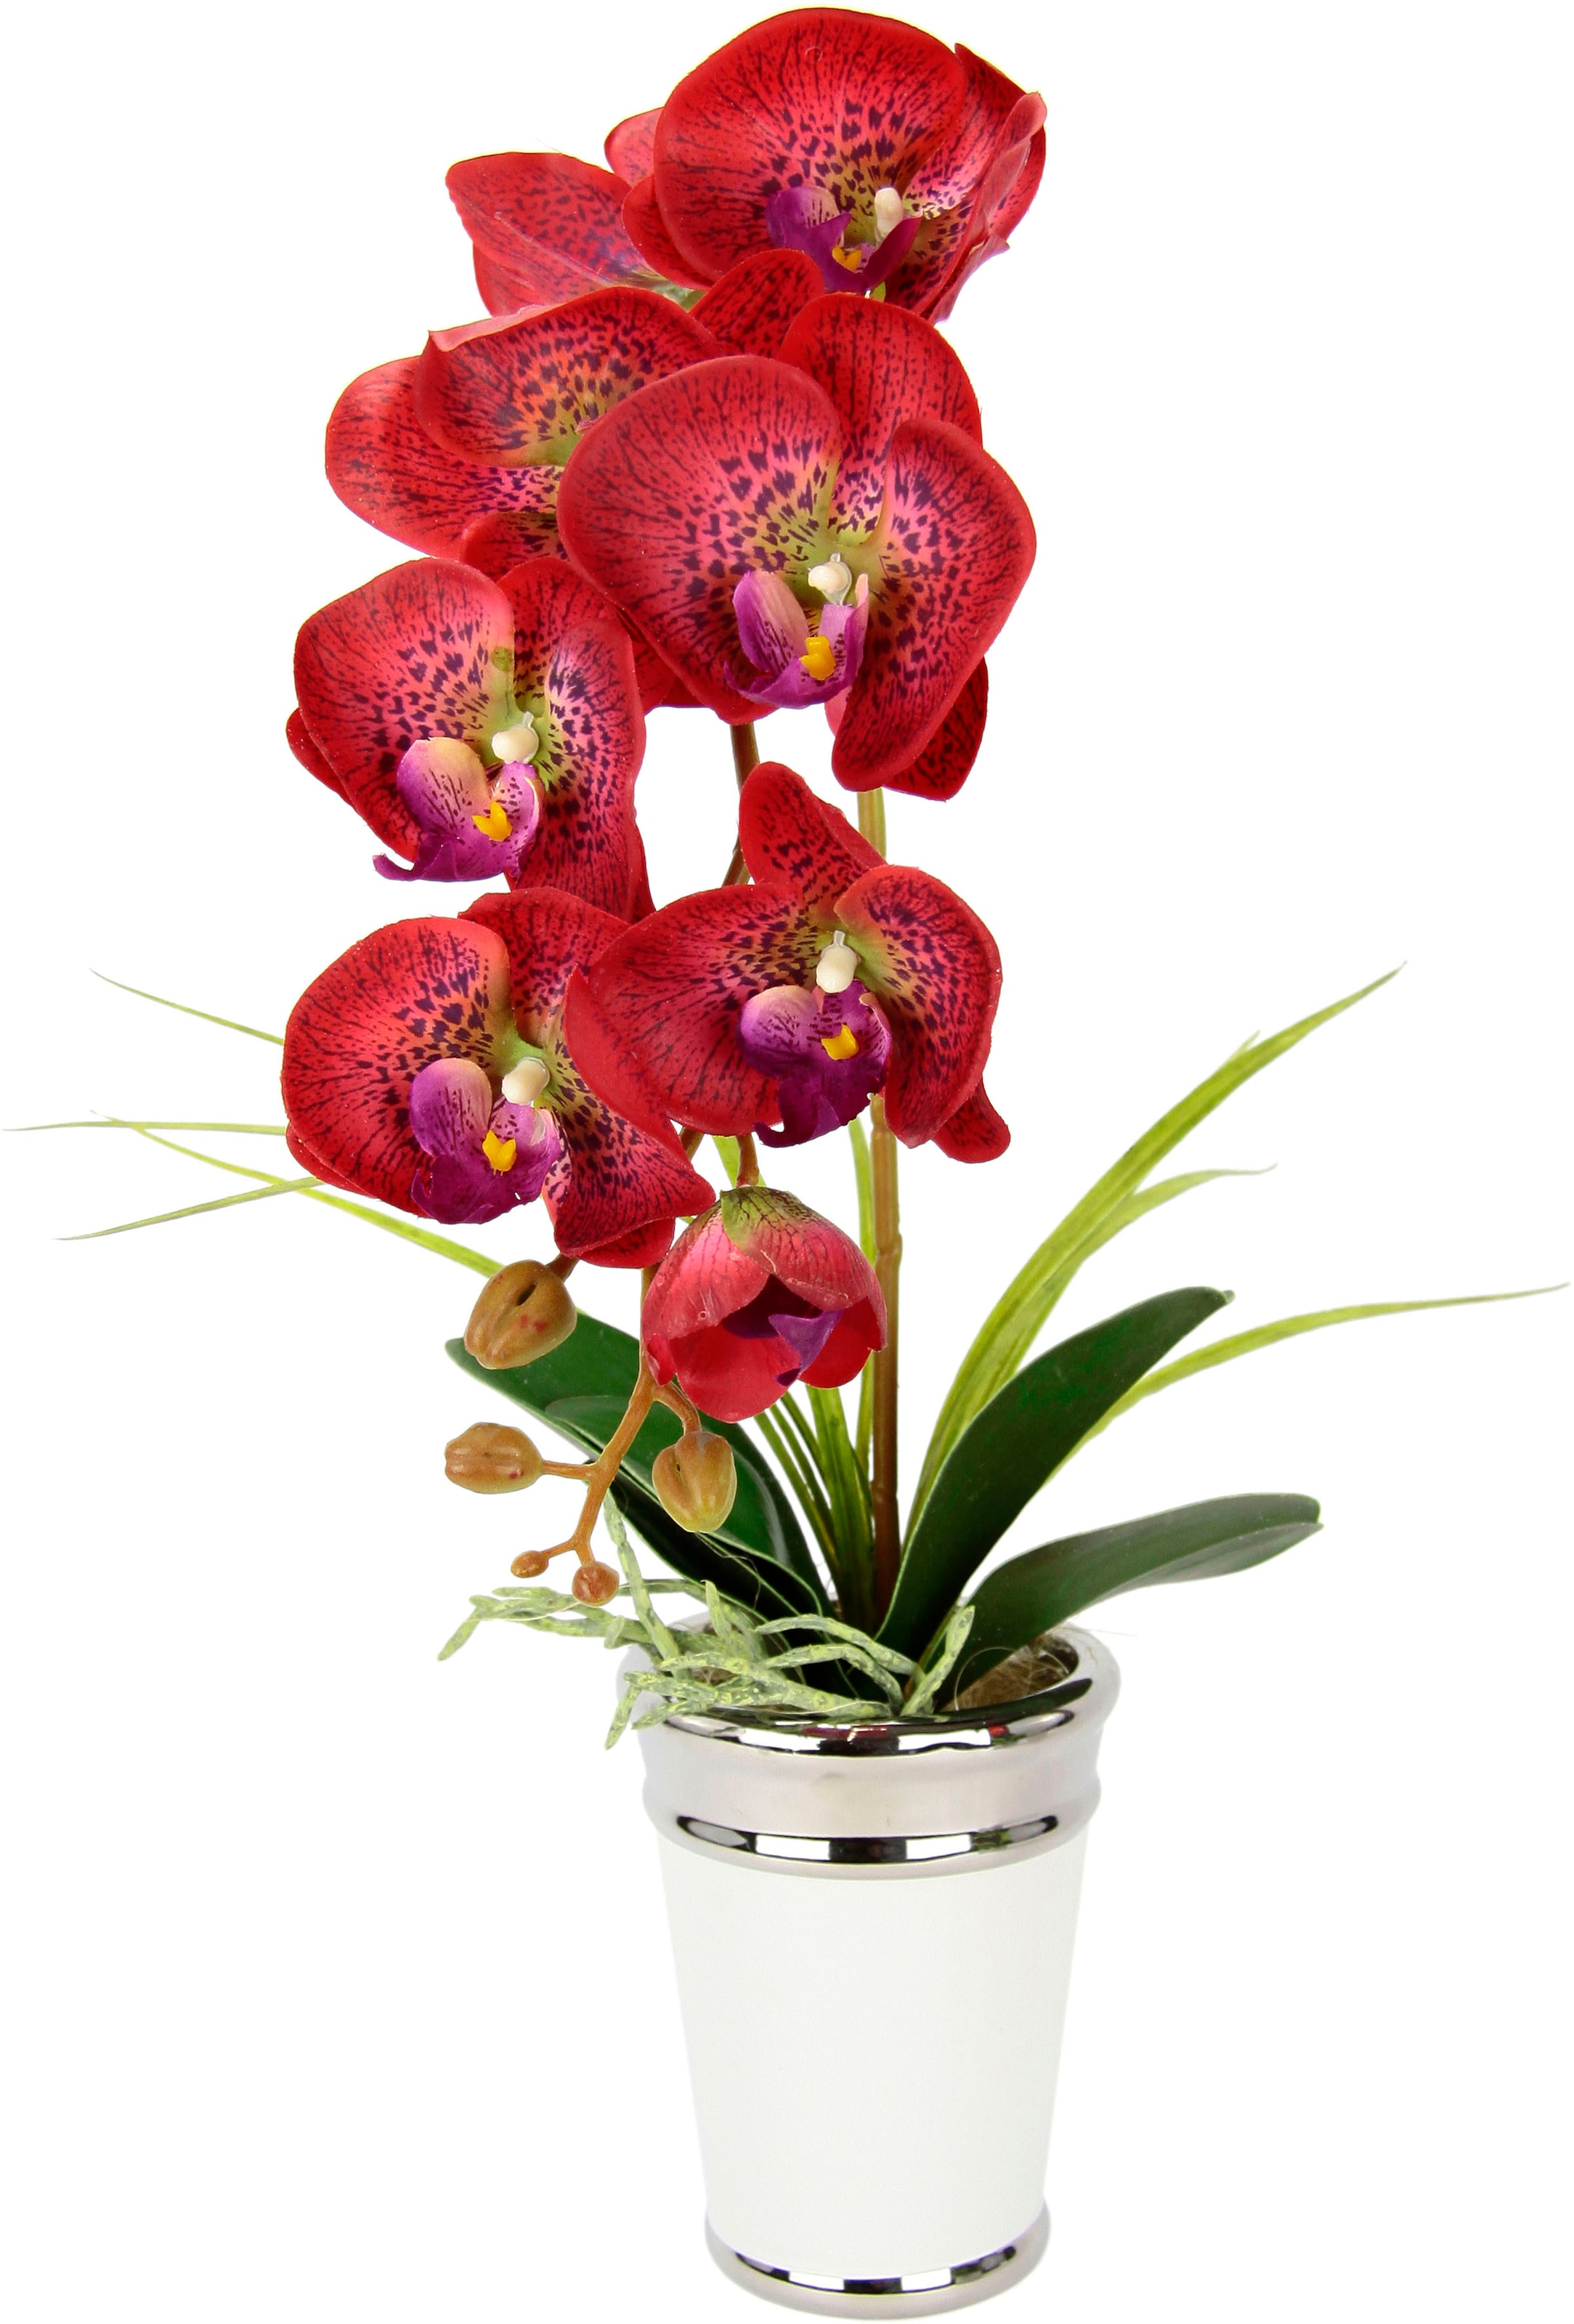 I.GE.A. Seidenblume Keramik, Kunstblume Touch kaufen »Orchidee«, Topf, im aus Real günstig